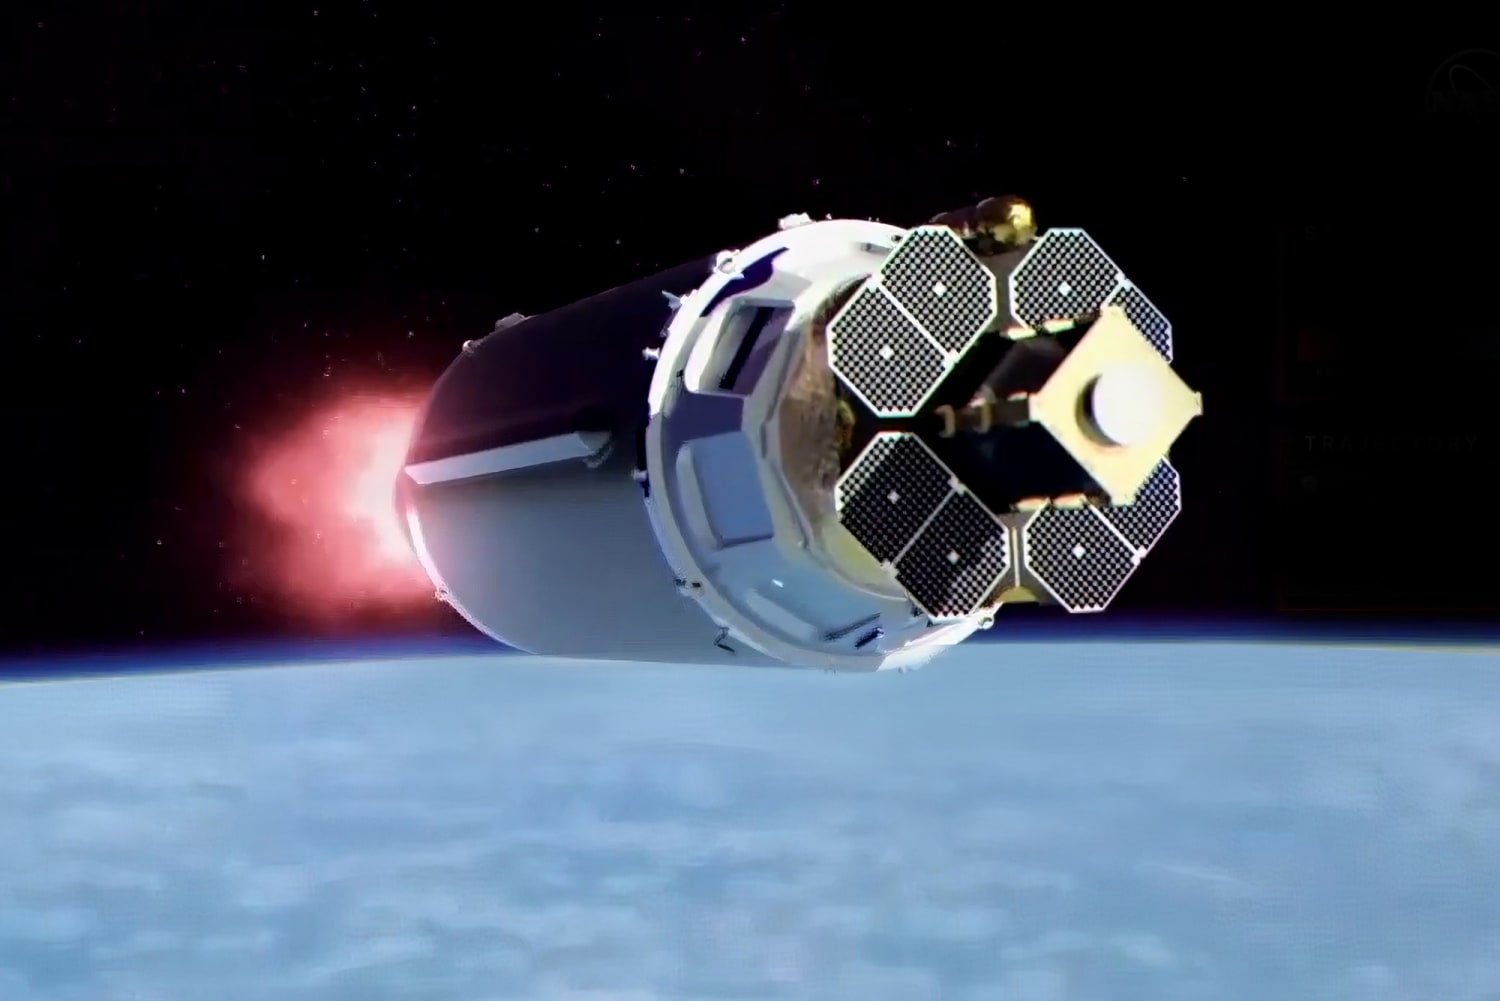 NASA satellite breaks from orbit around Earth, heads to moon